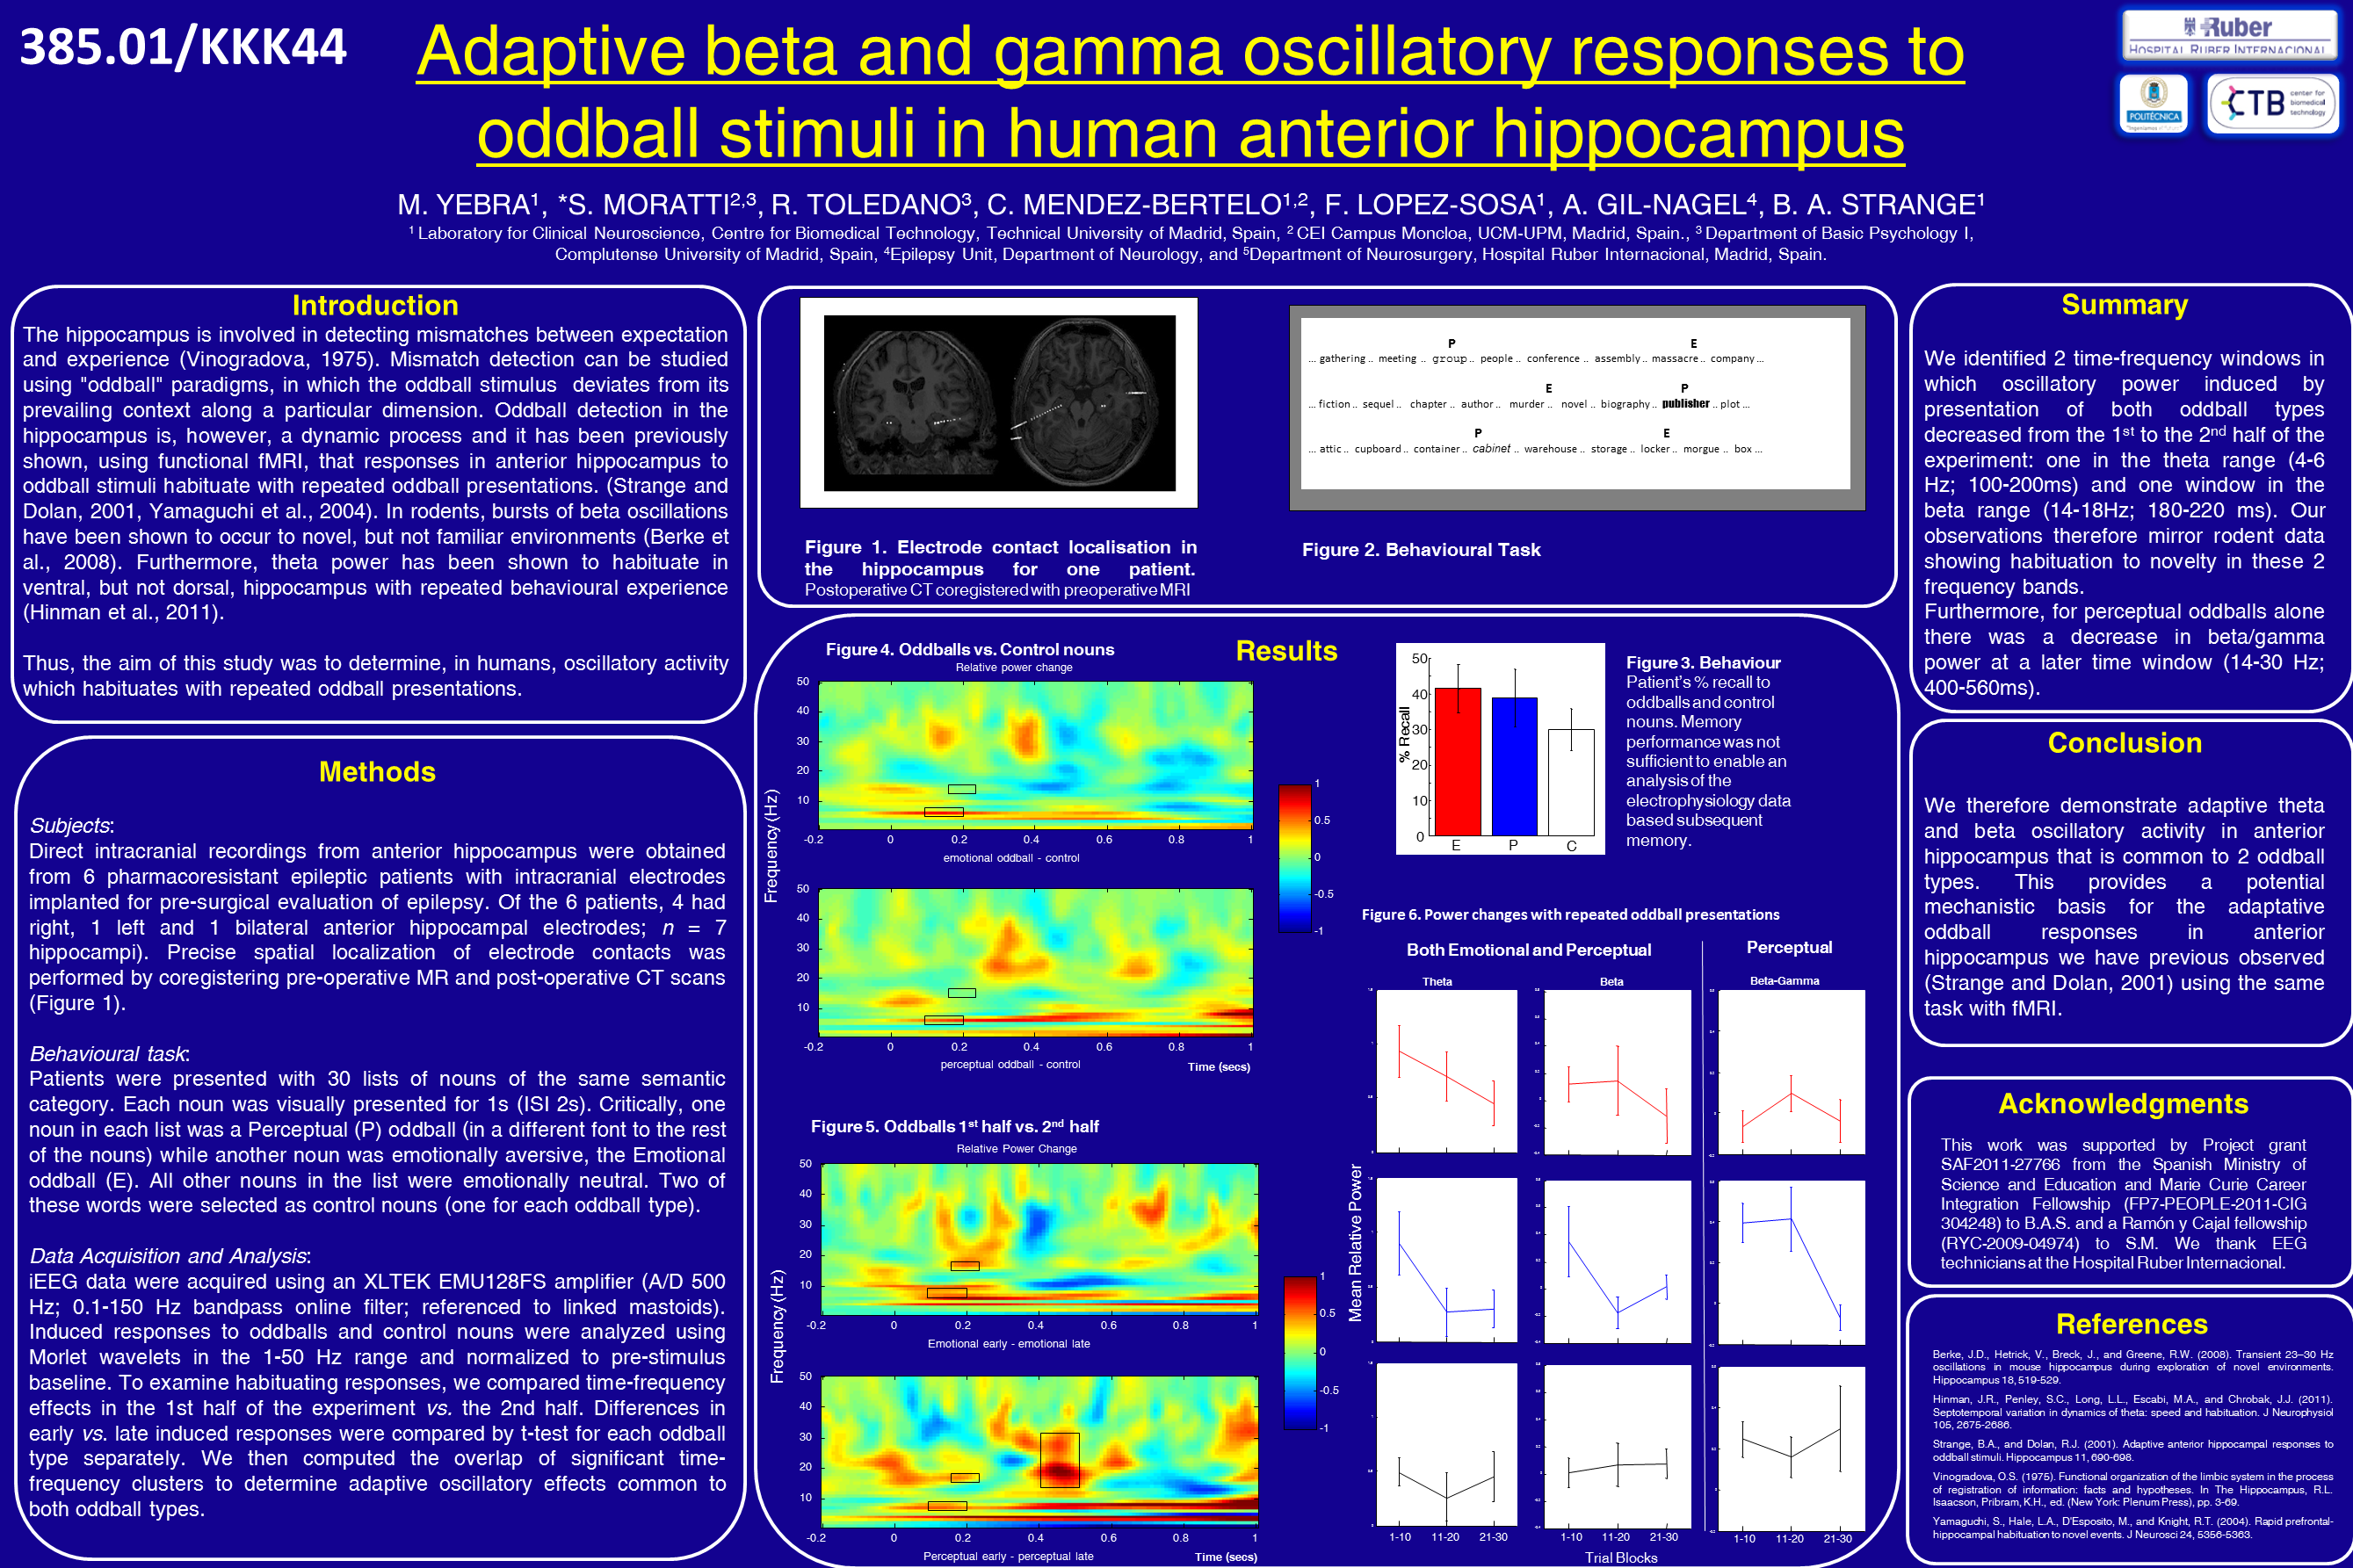 Adaptive beta and gamma oscillatory responses to oddball stimuli in human anterior hippocampus